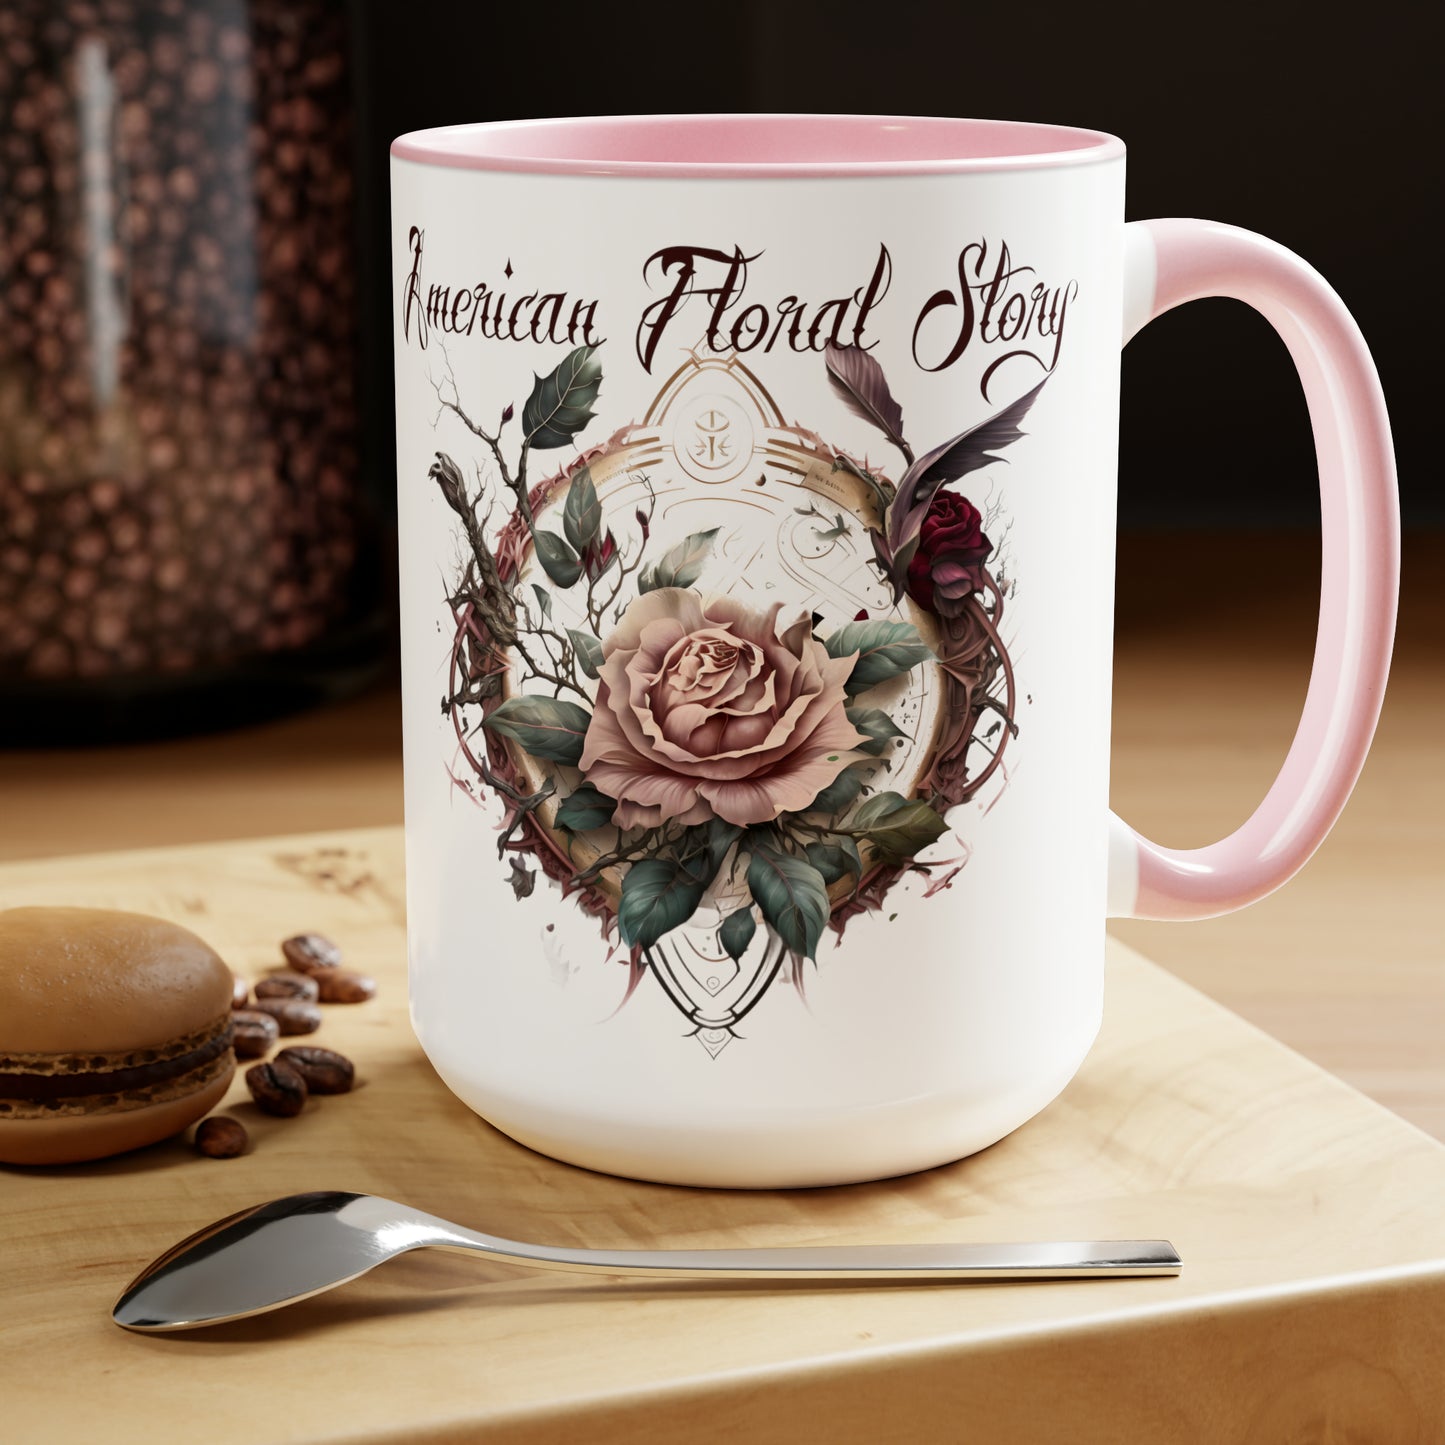 american floral story - 15oz graphic mug